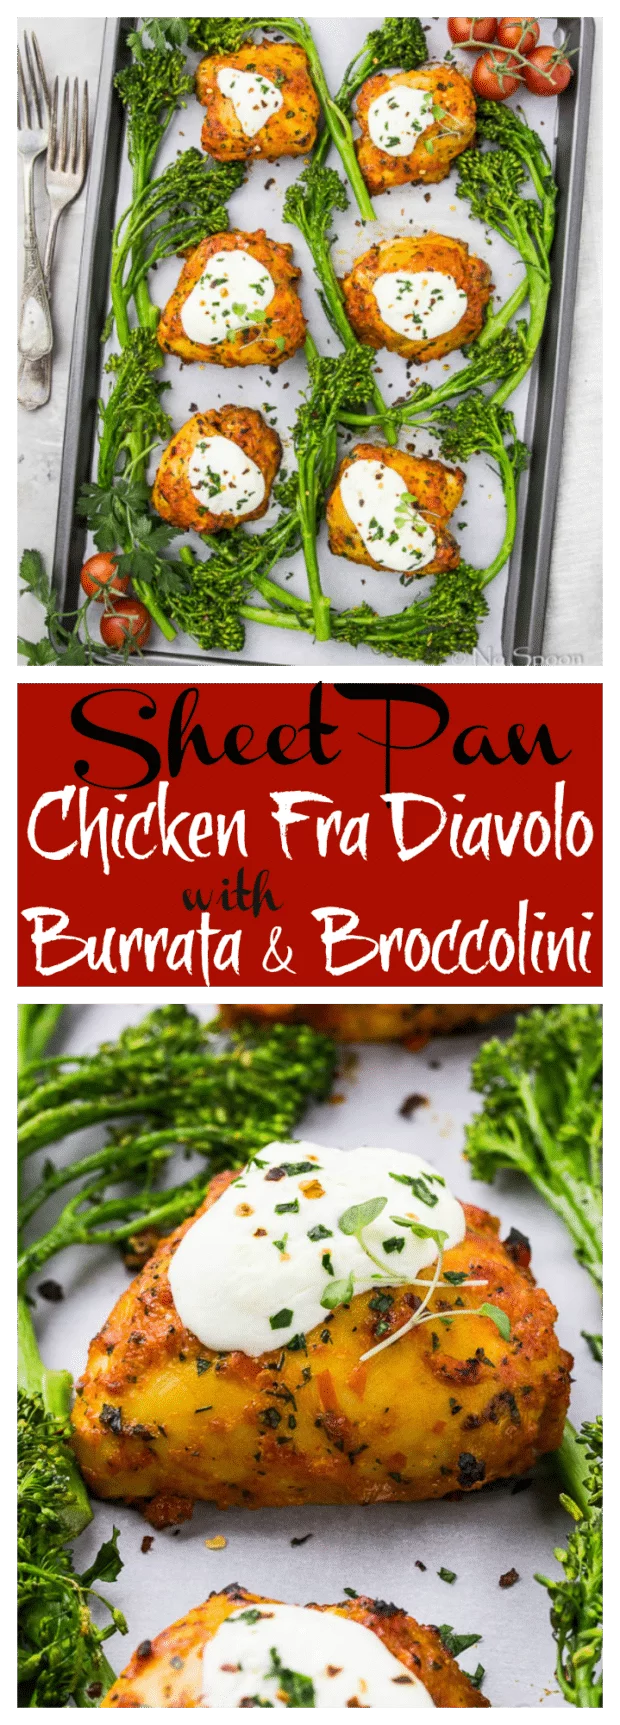 Sheet Pan Chicken Fra Diavolo with Burrata & Broccolini